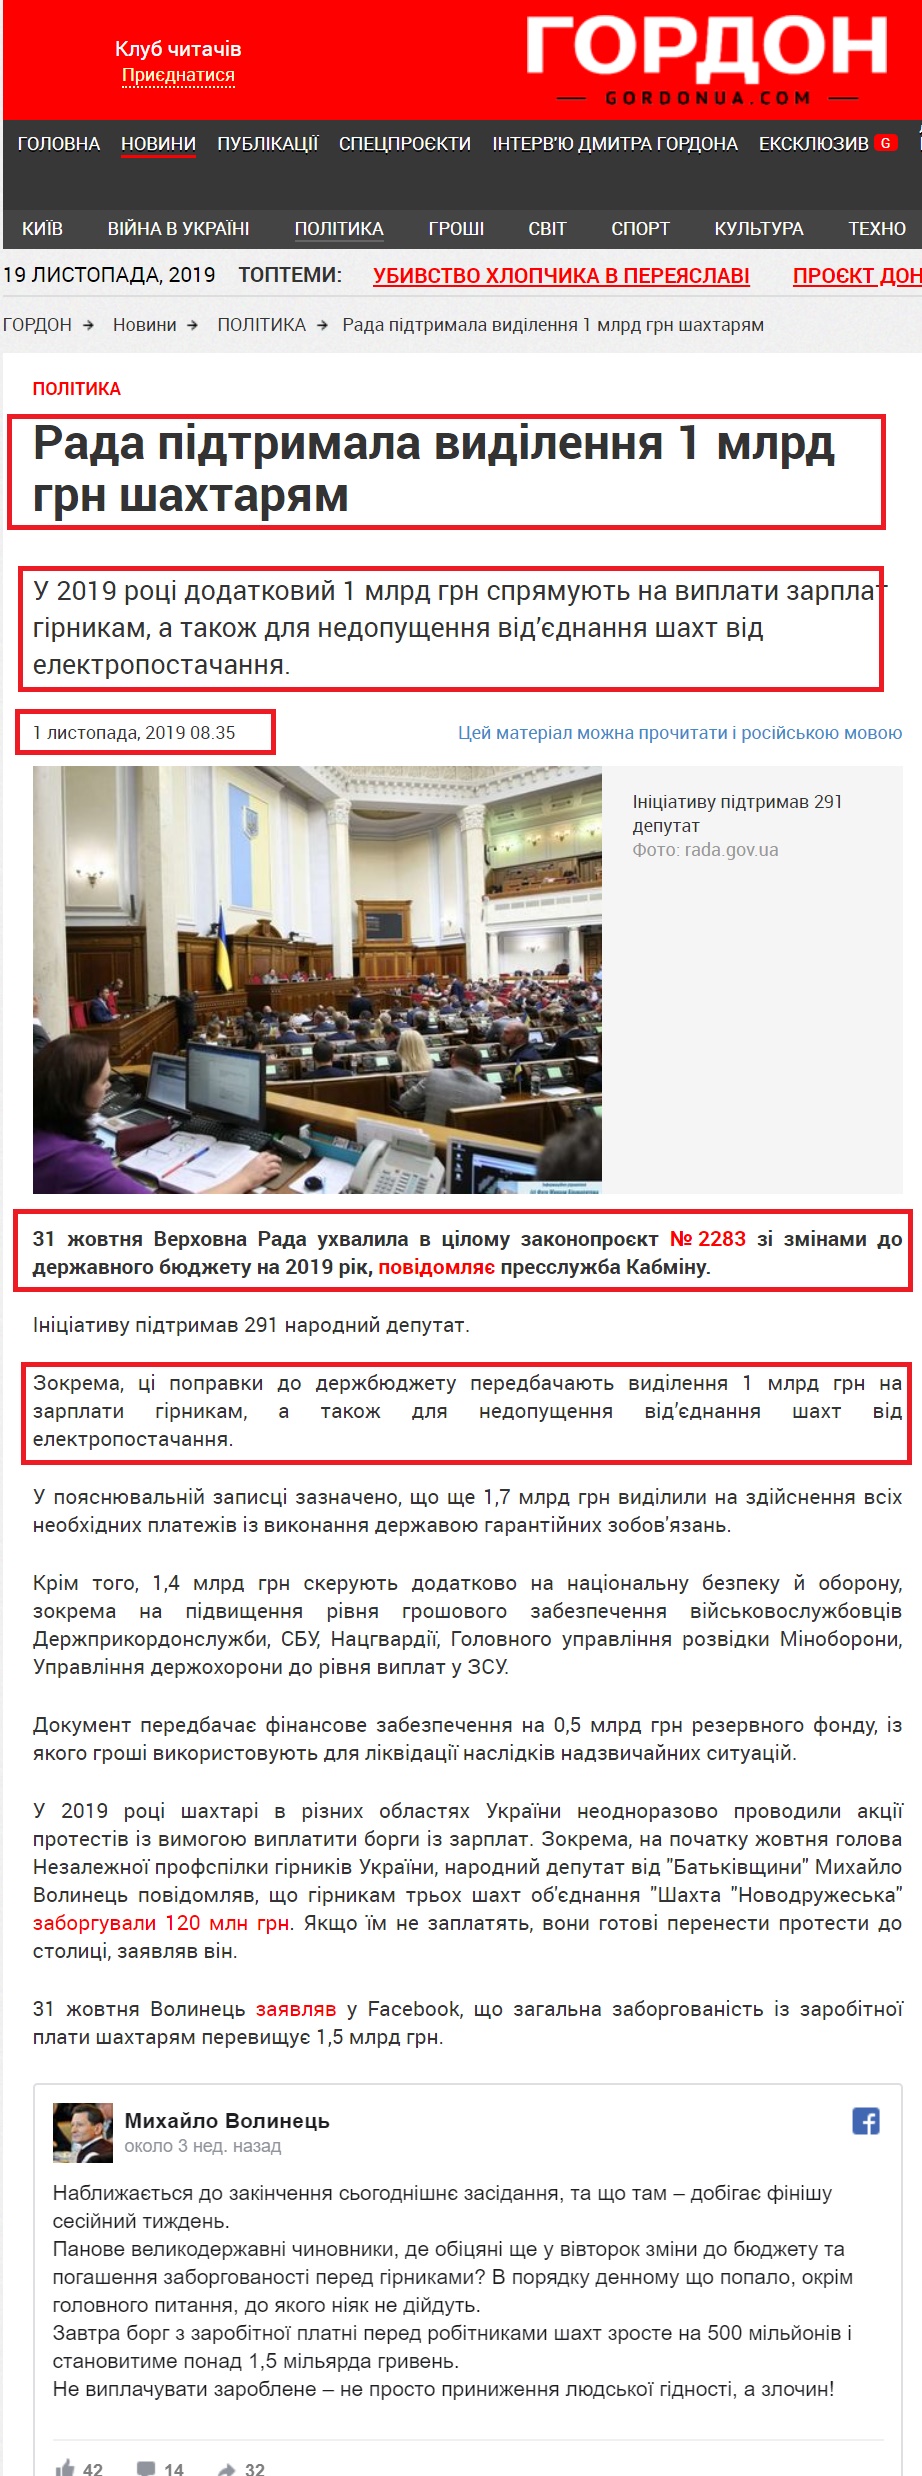 https://gordonua.com/ukr/news/politics/-rada-pidtrimala-vidilennja-1-mlrd-grn-shahtarjam-1391700.html